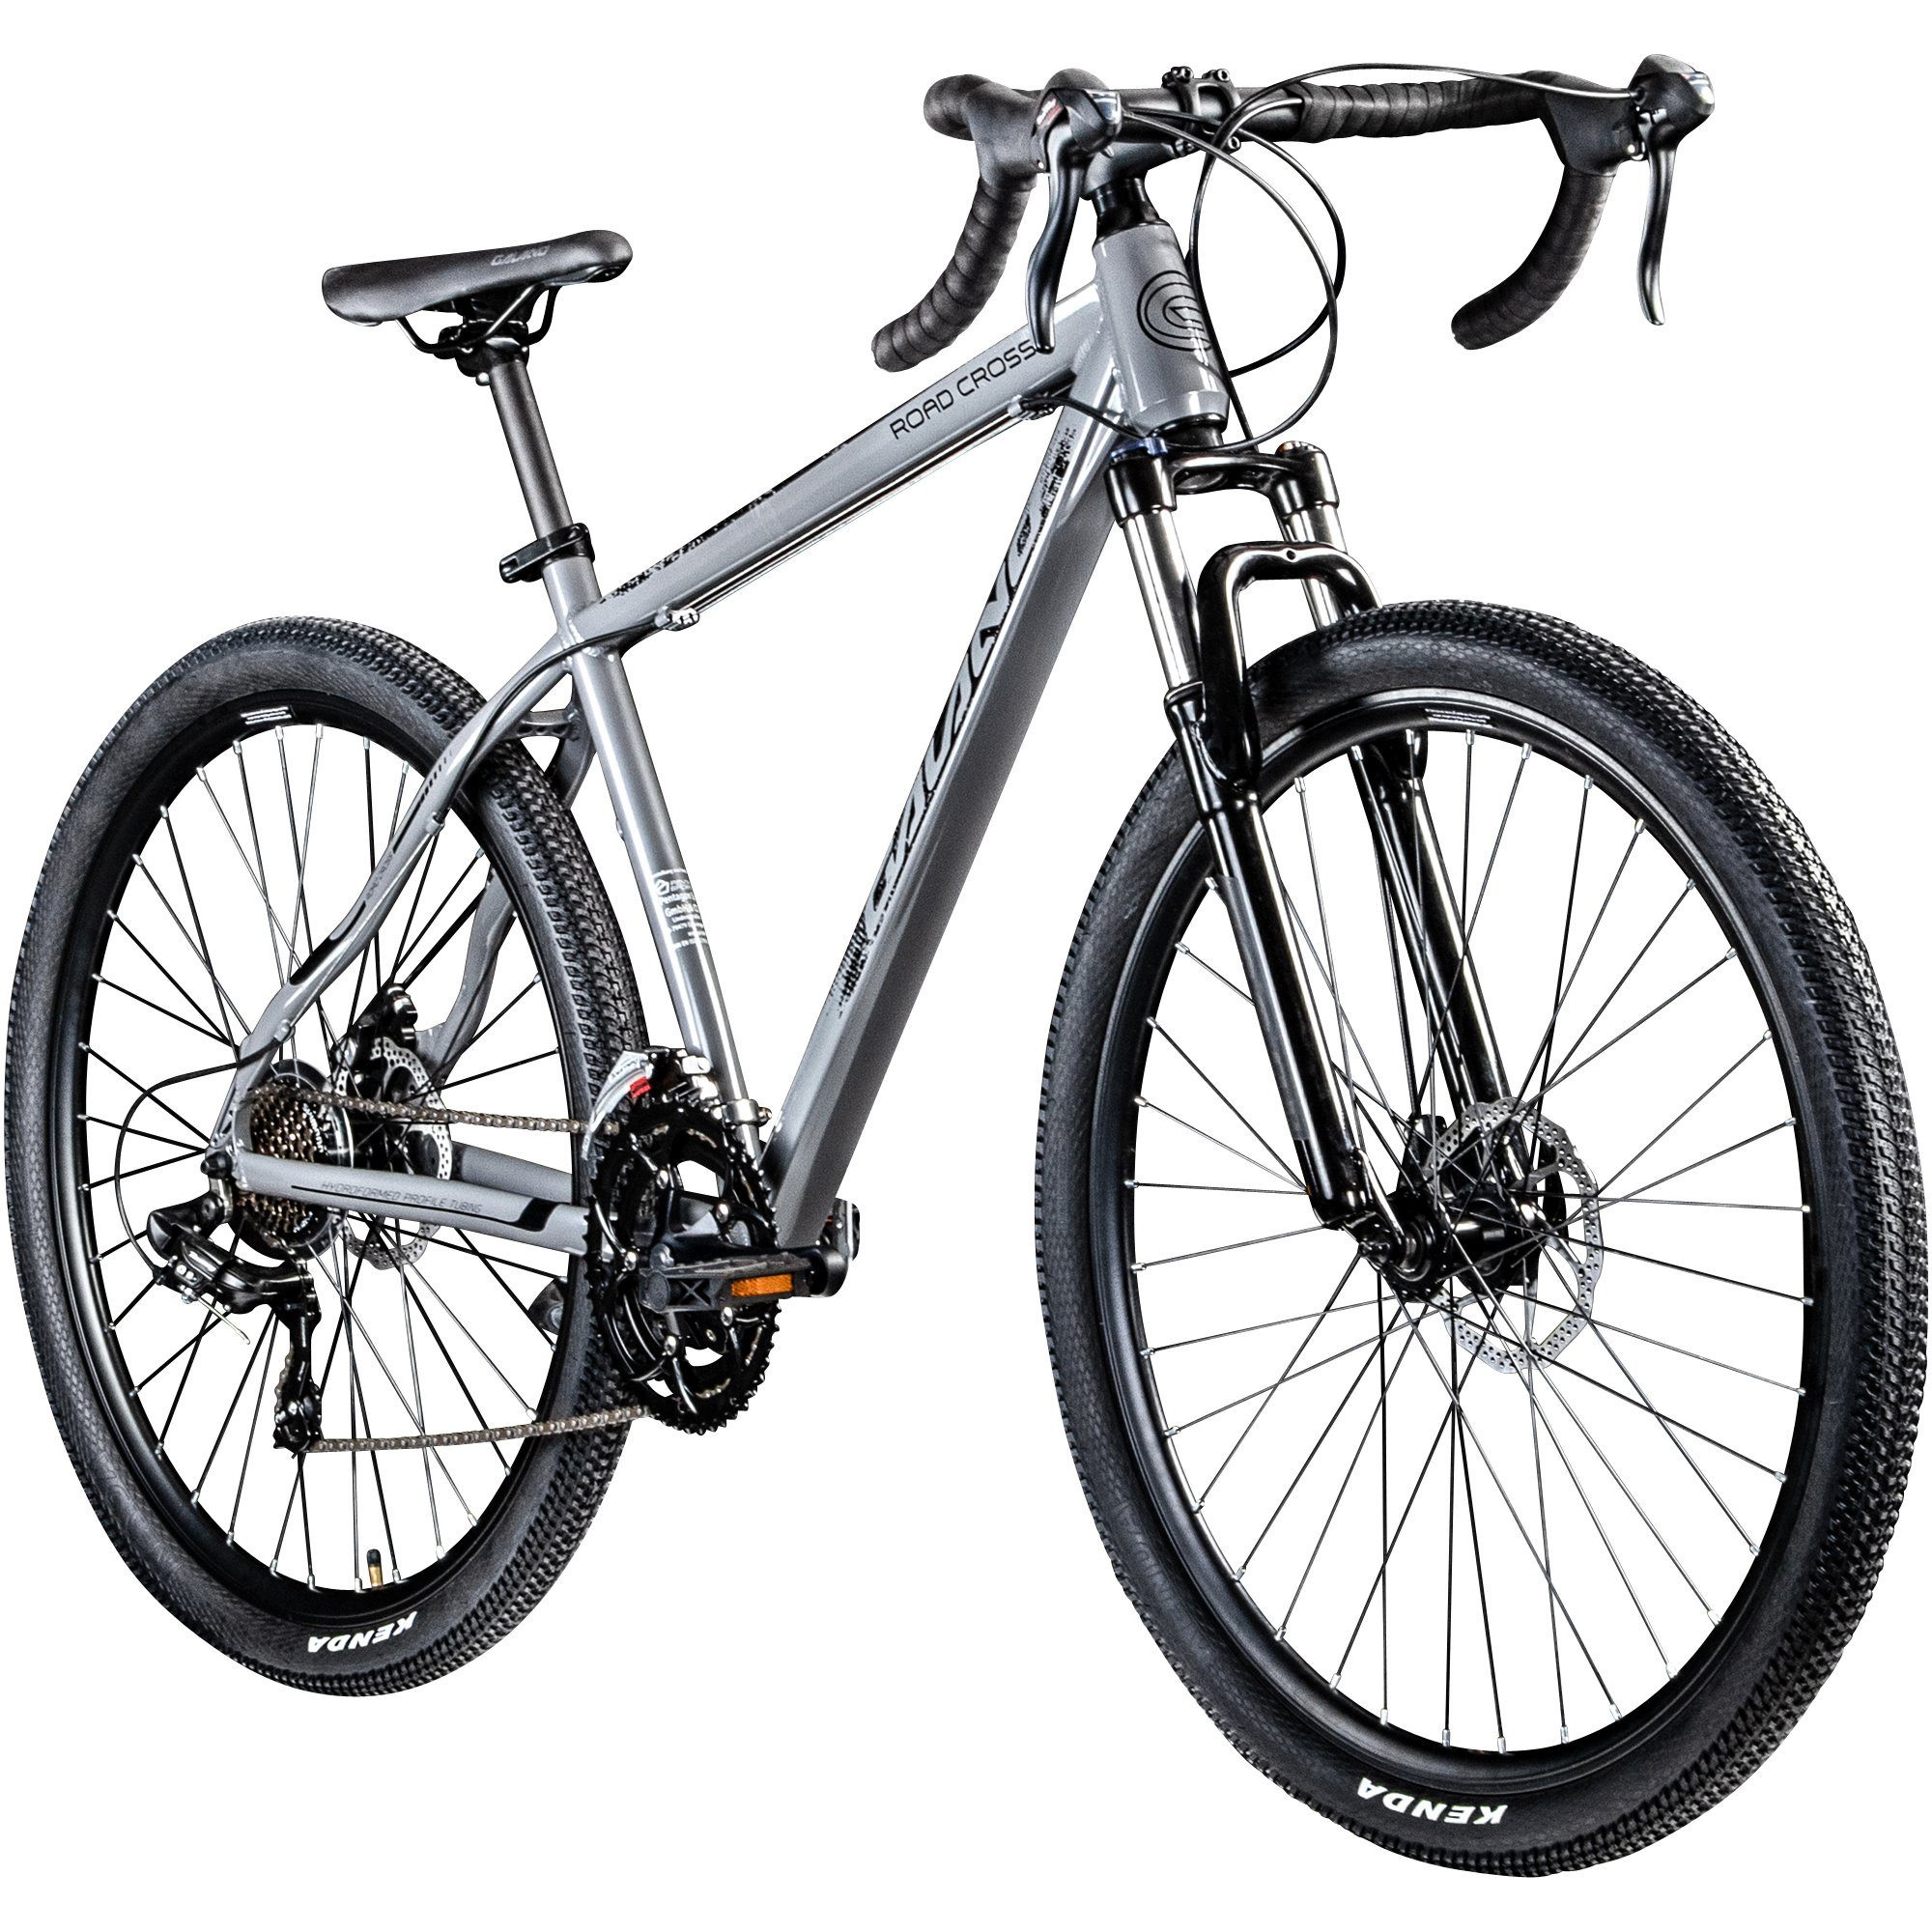 Galano Cyclocross-Rad Road Cross, 170 Damen Fitnessbike Bike und - grau/schwarz Gravel Crossrad Herren für 14 Gang, 195 Kettenschaltung, cm